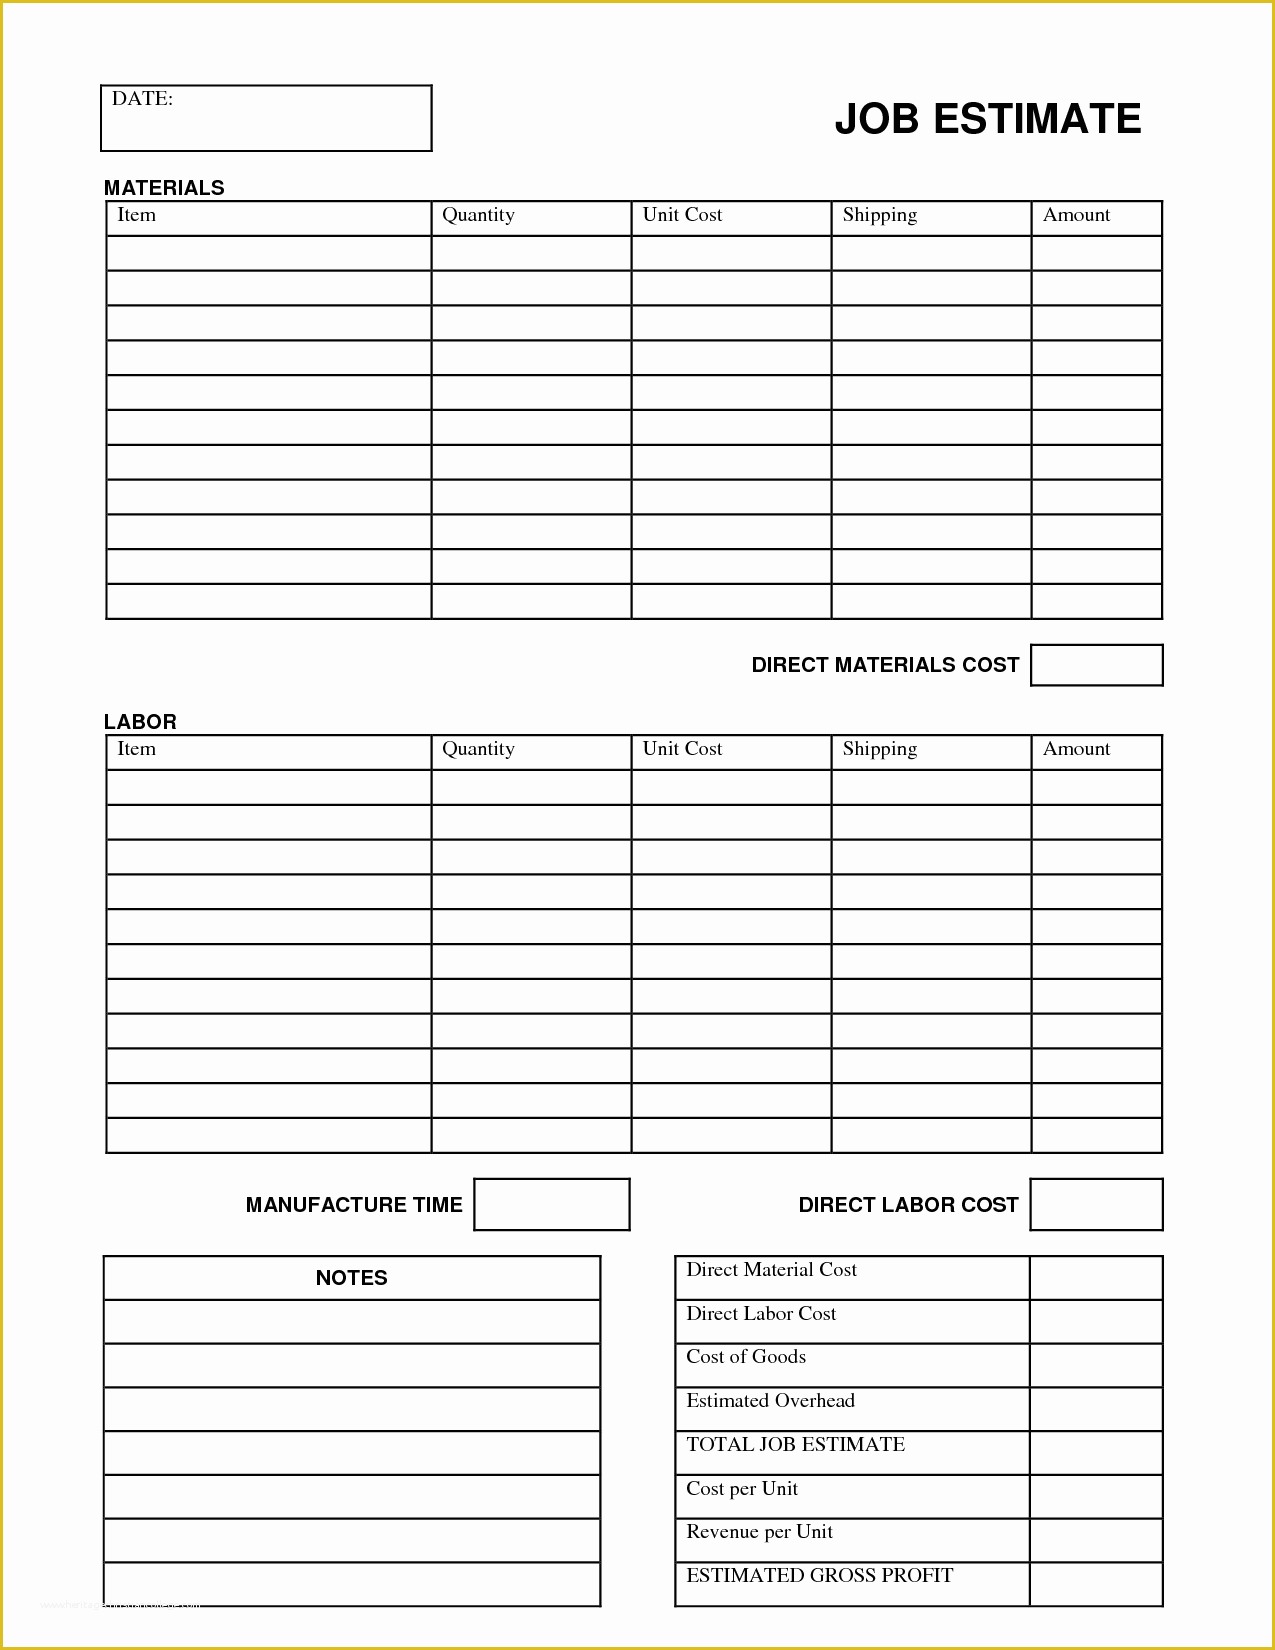 Free Bid Sheet Template Of Printable Job Estimate forms